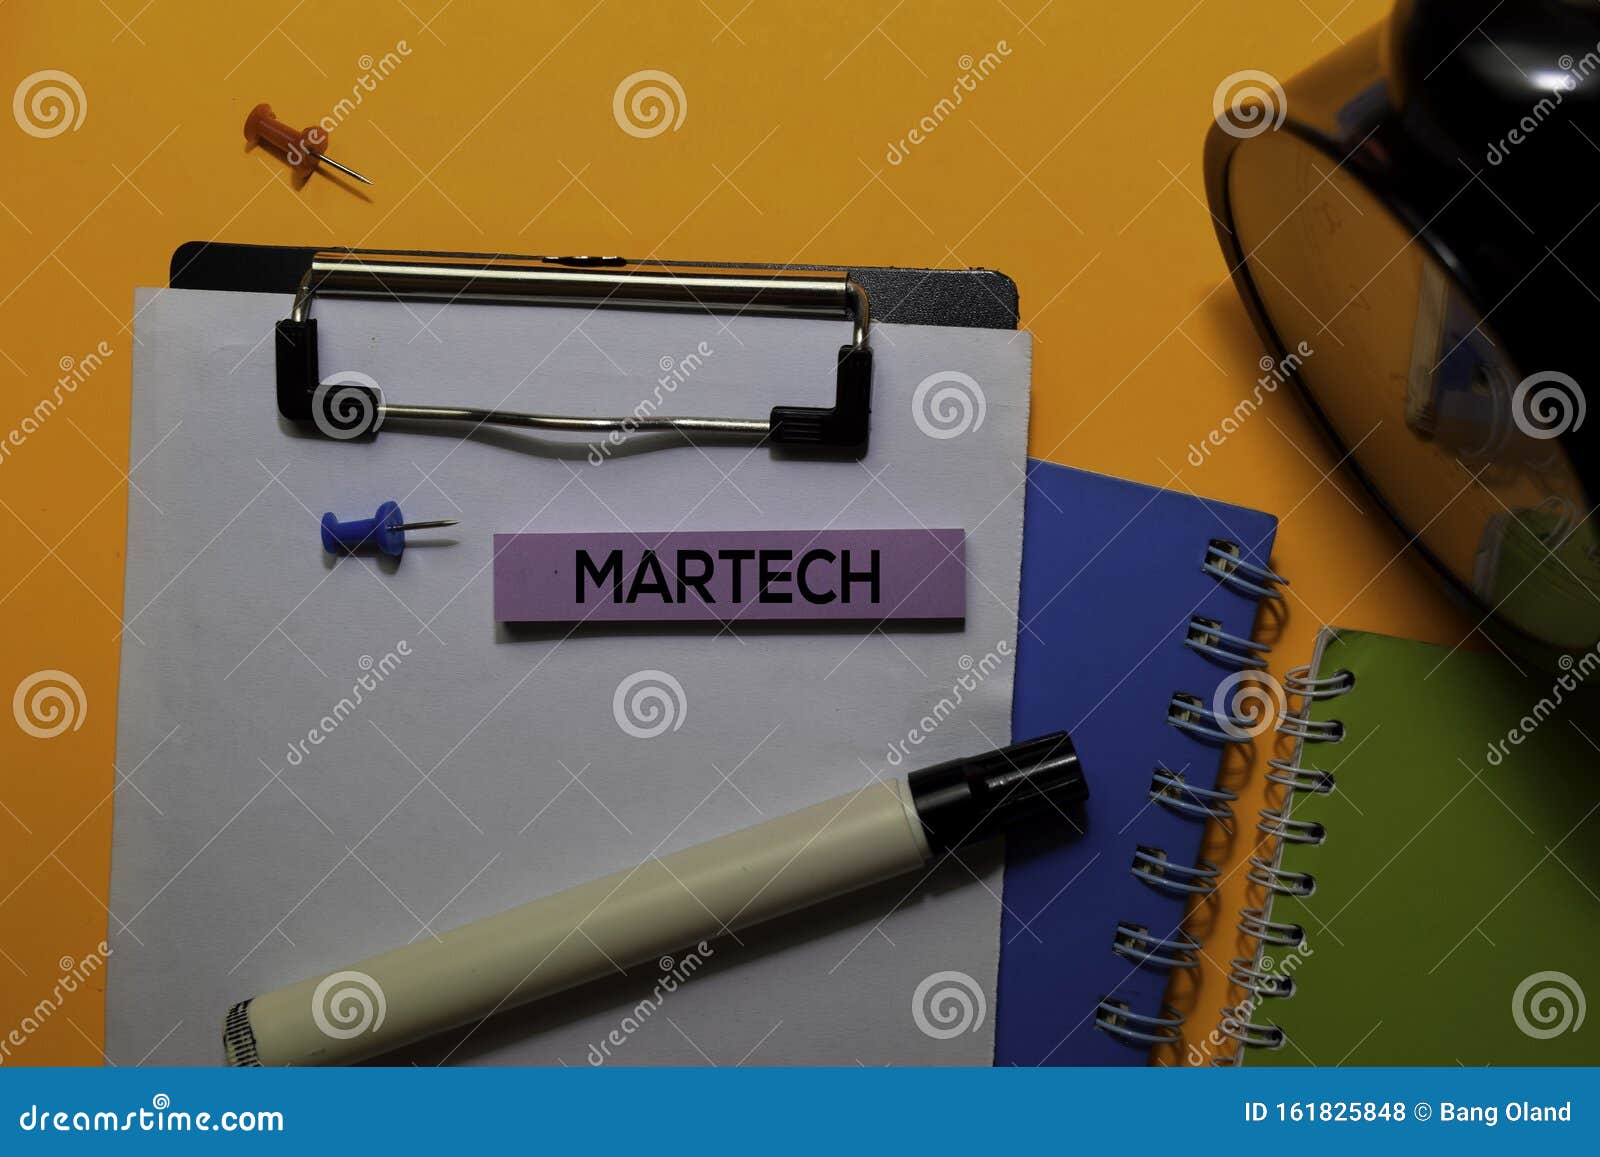 martech write on sticky notes.  on orange table background